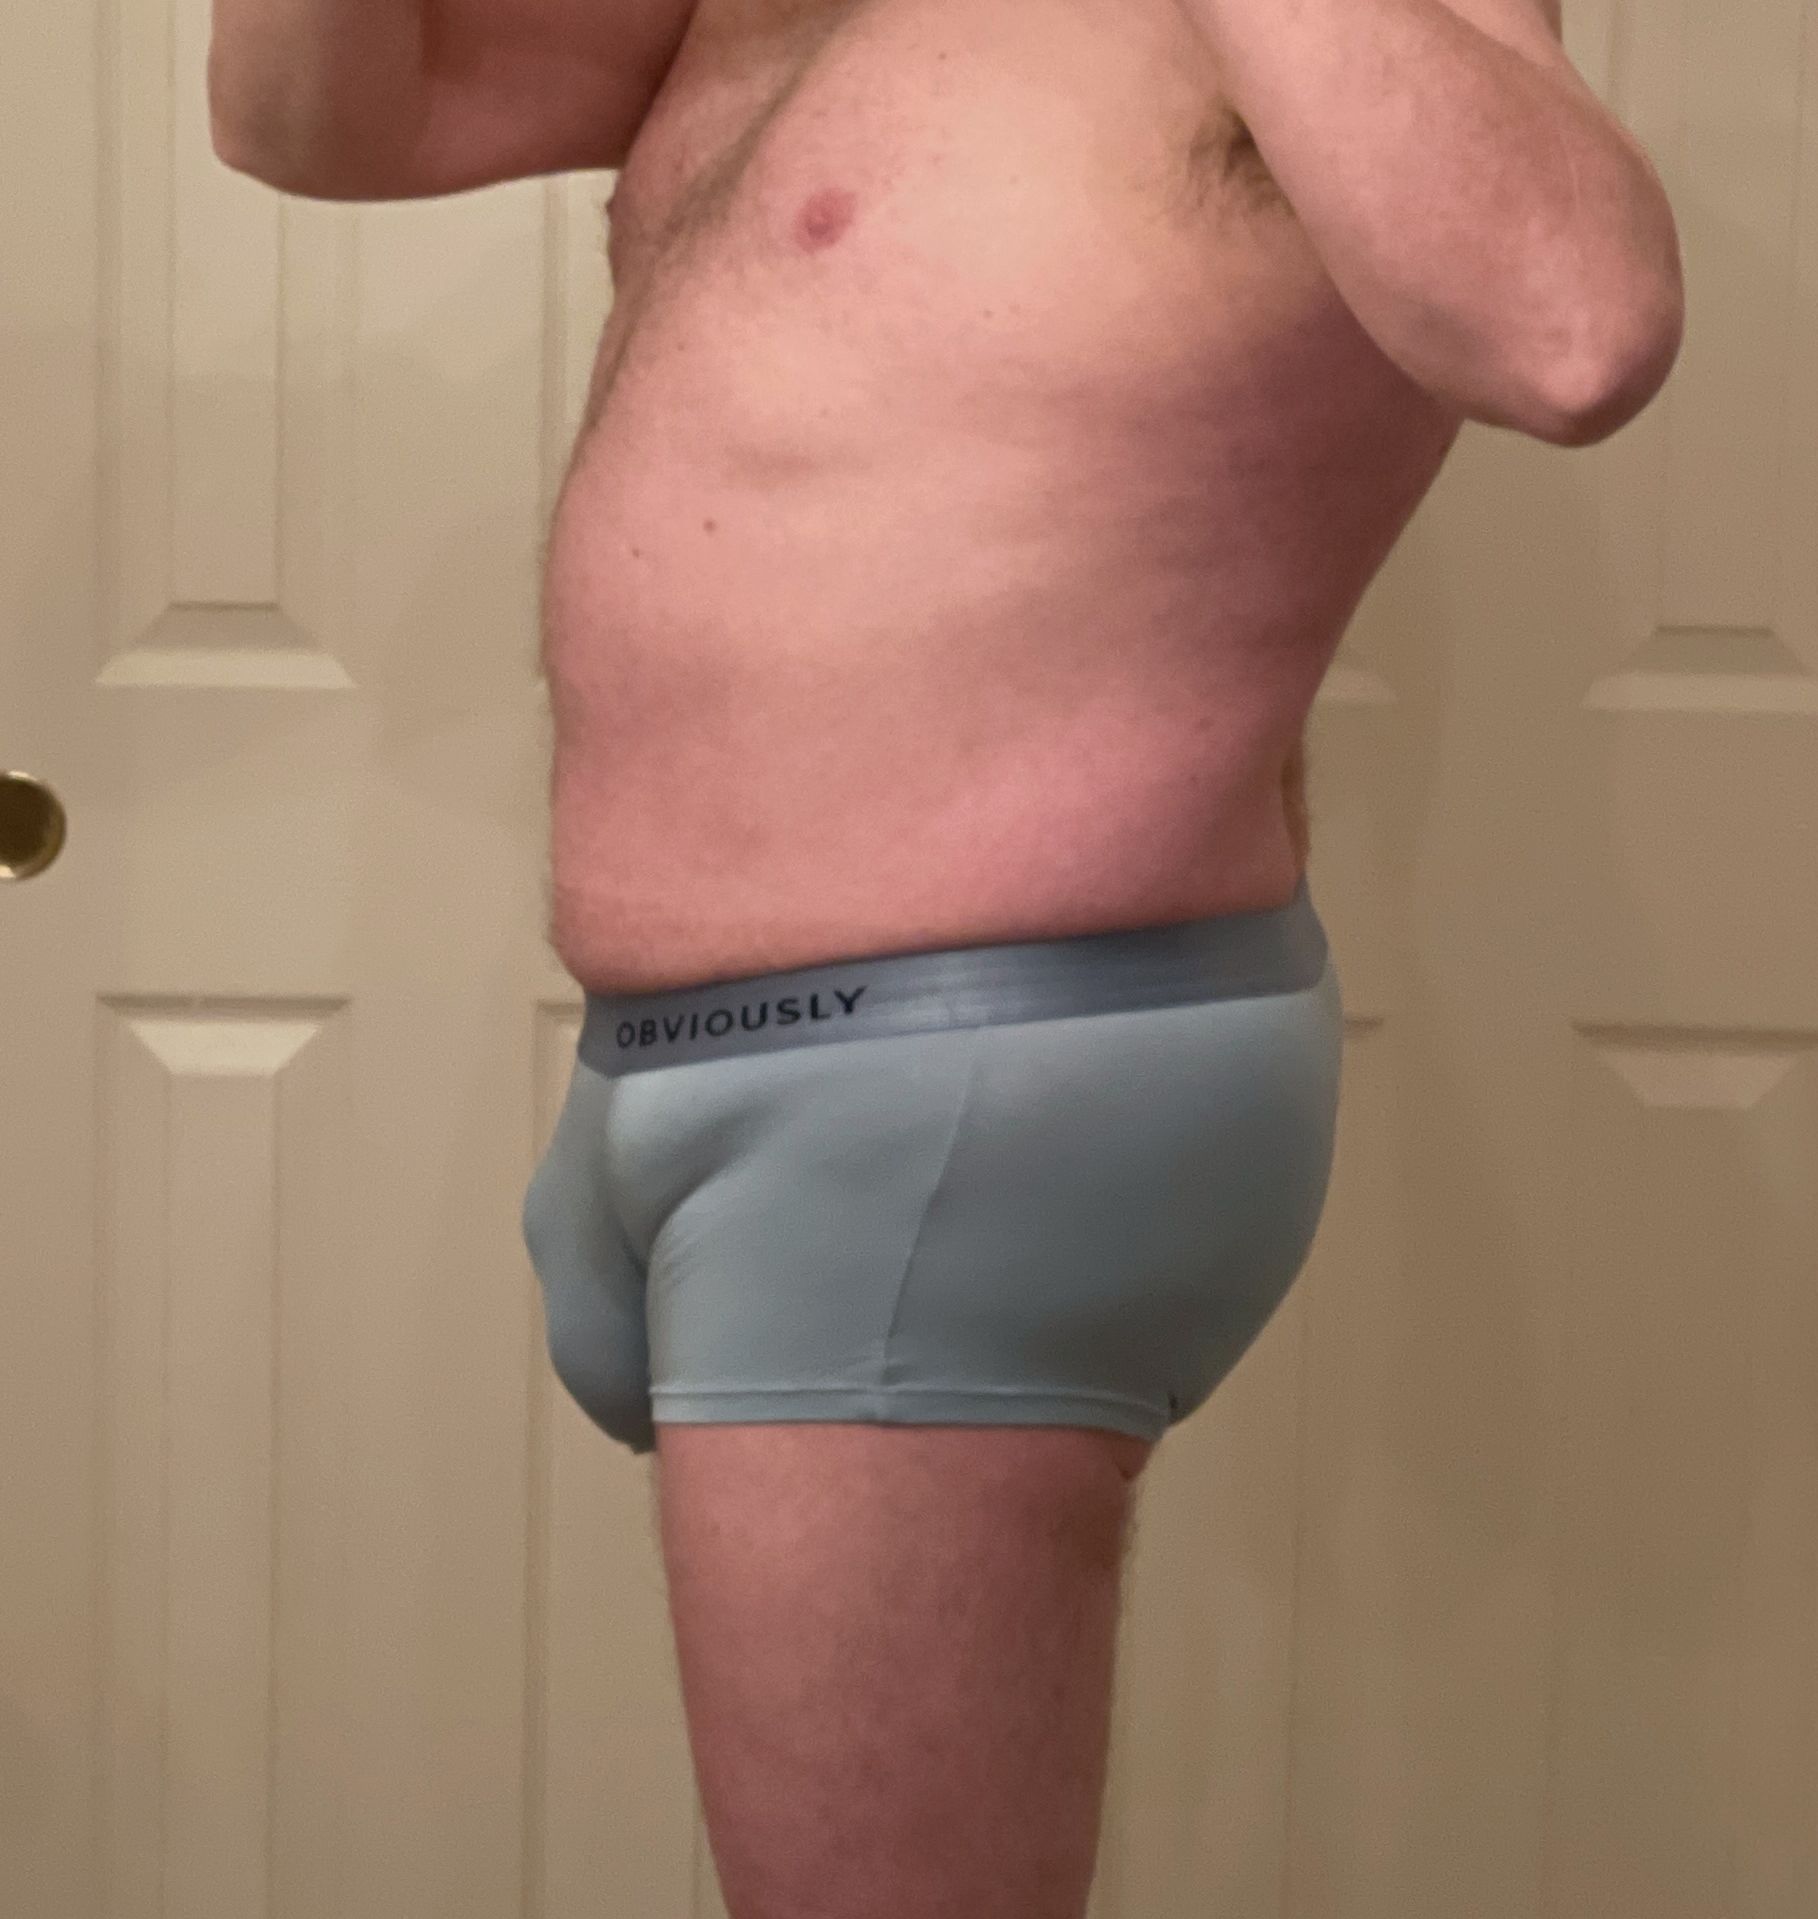 Chubby Guy in Underwear #34